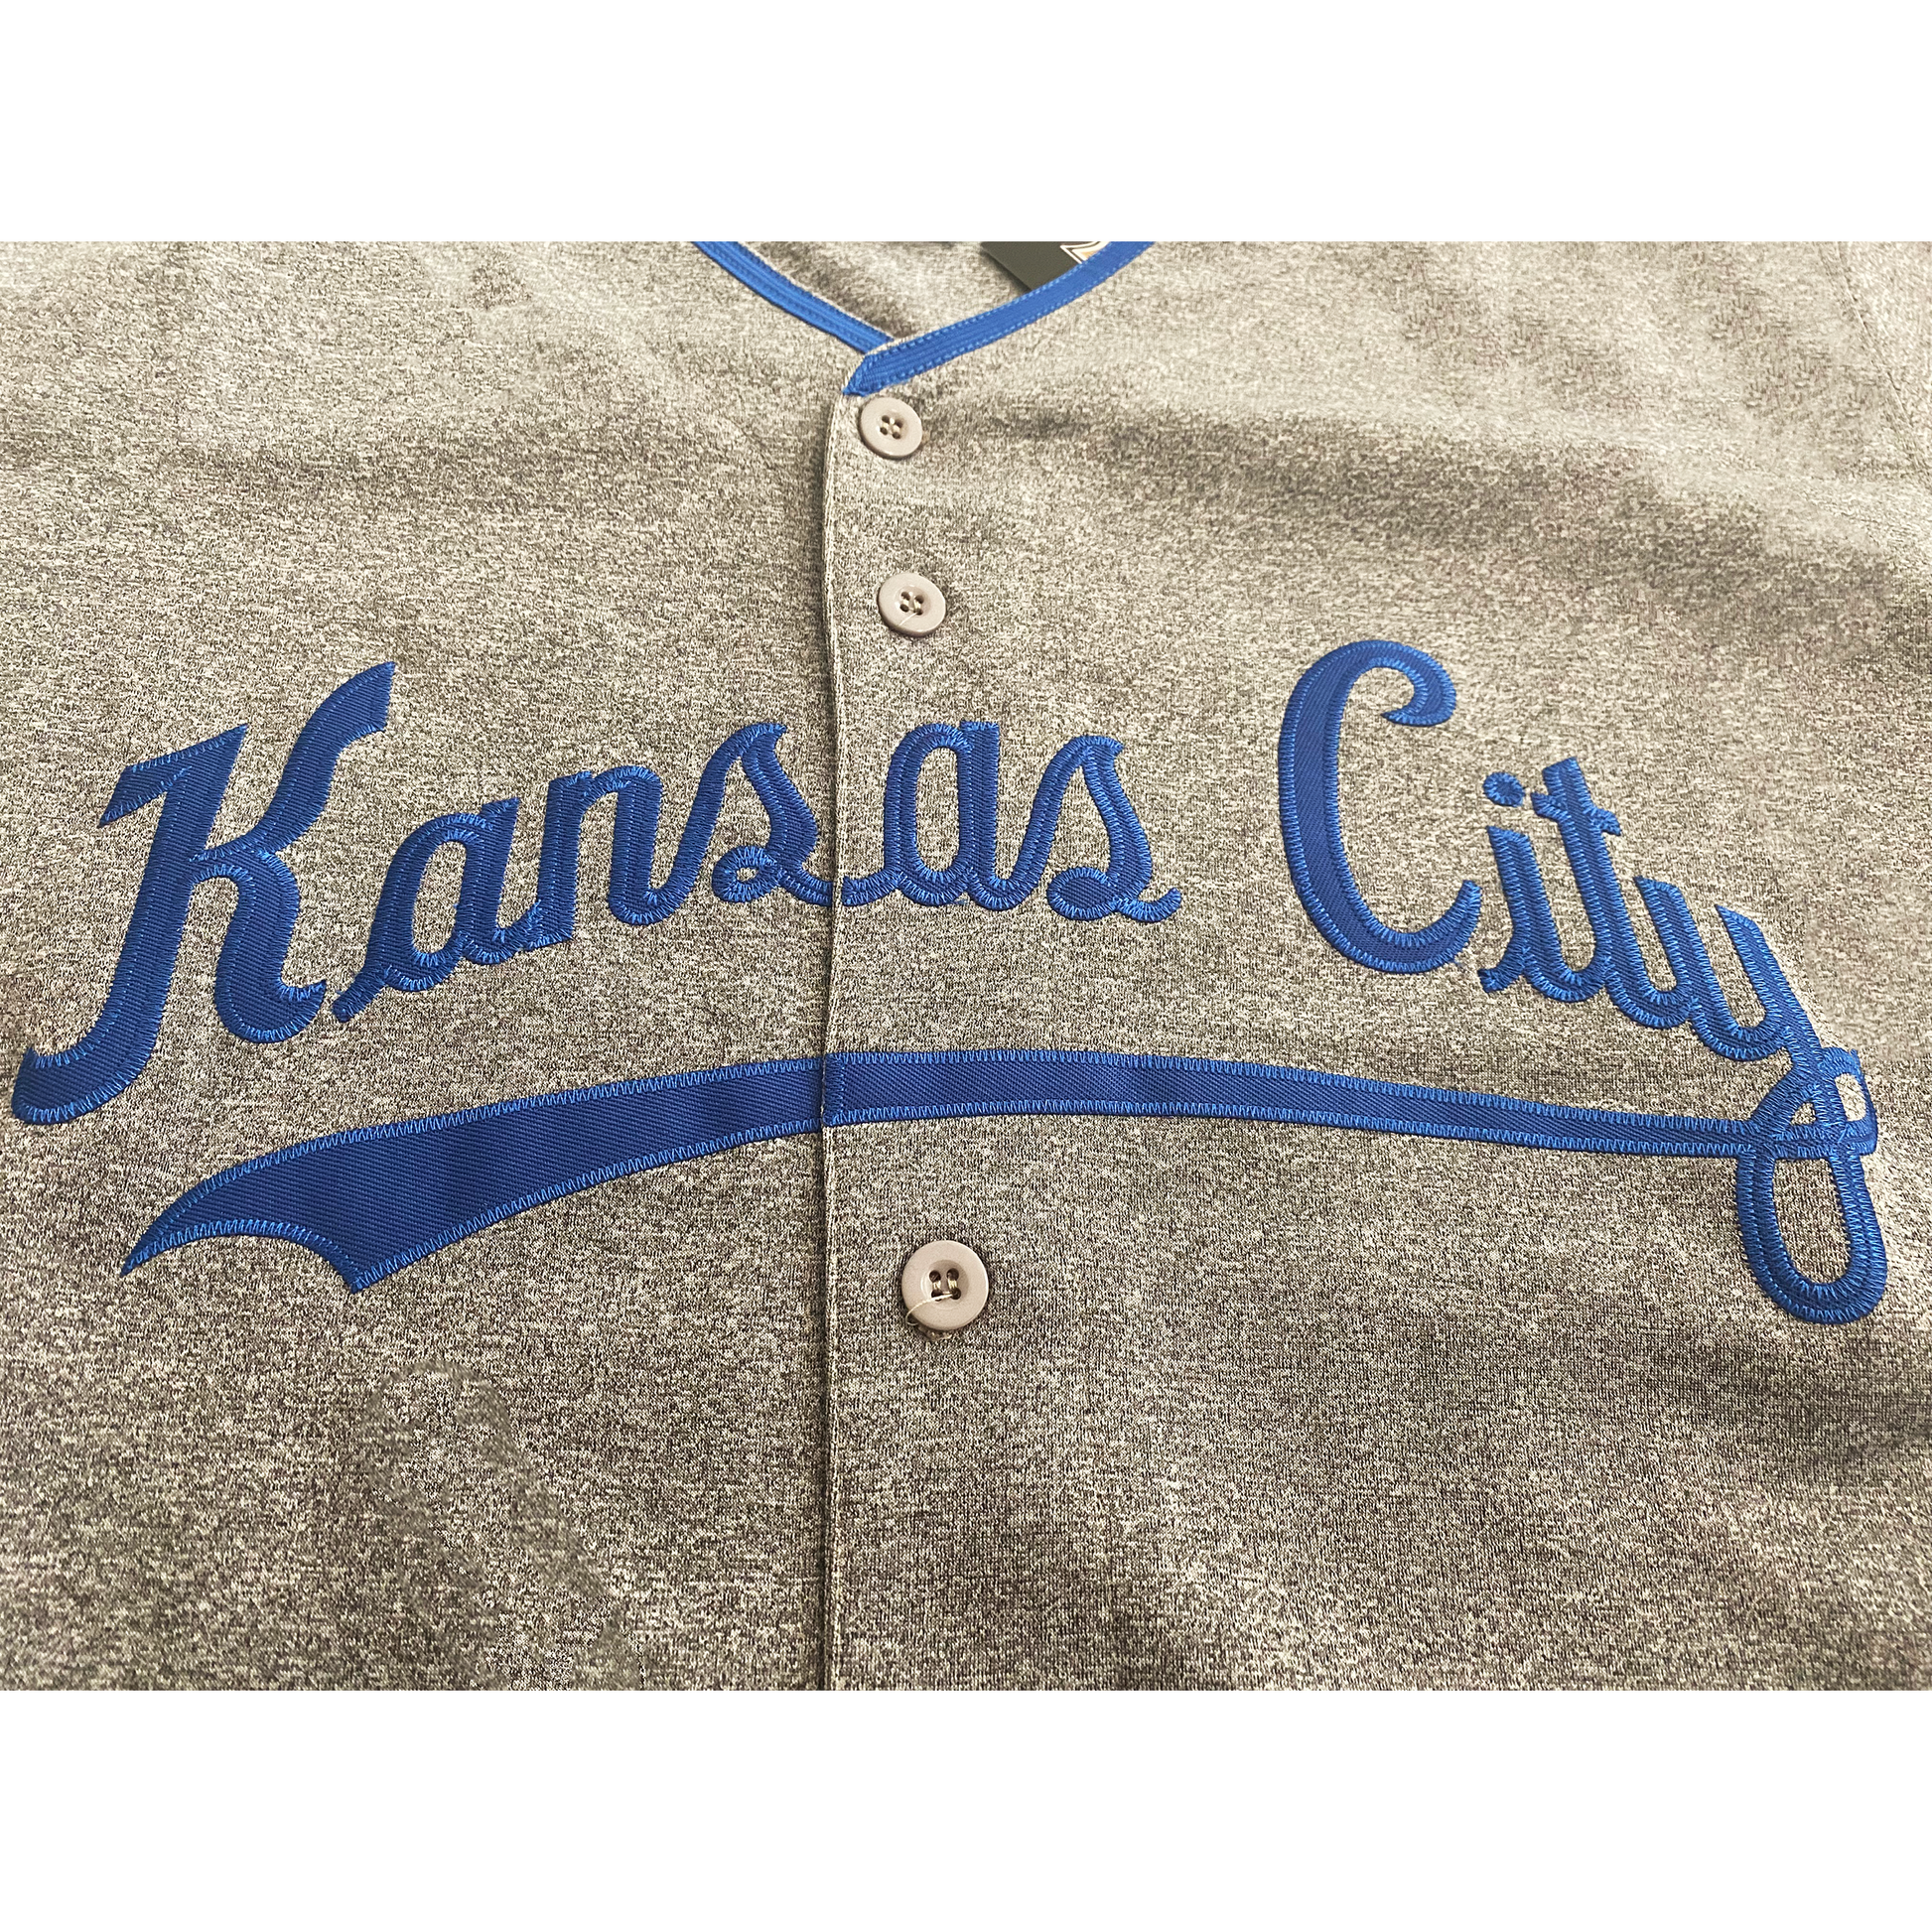 Kansas City Royals Vintage Apparel & Jerseys